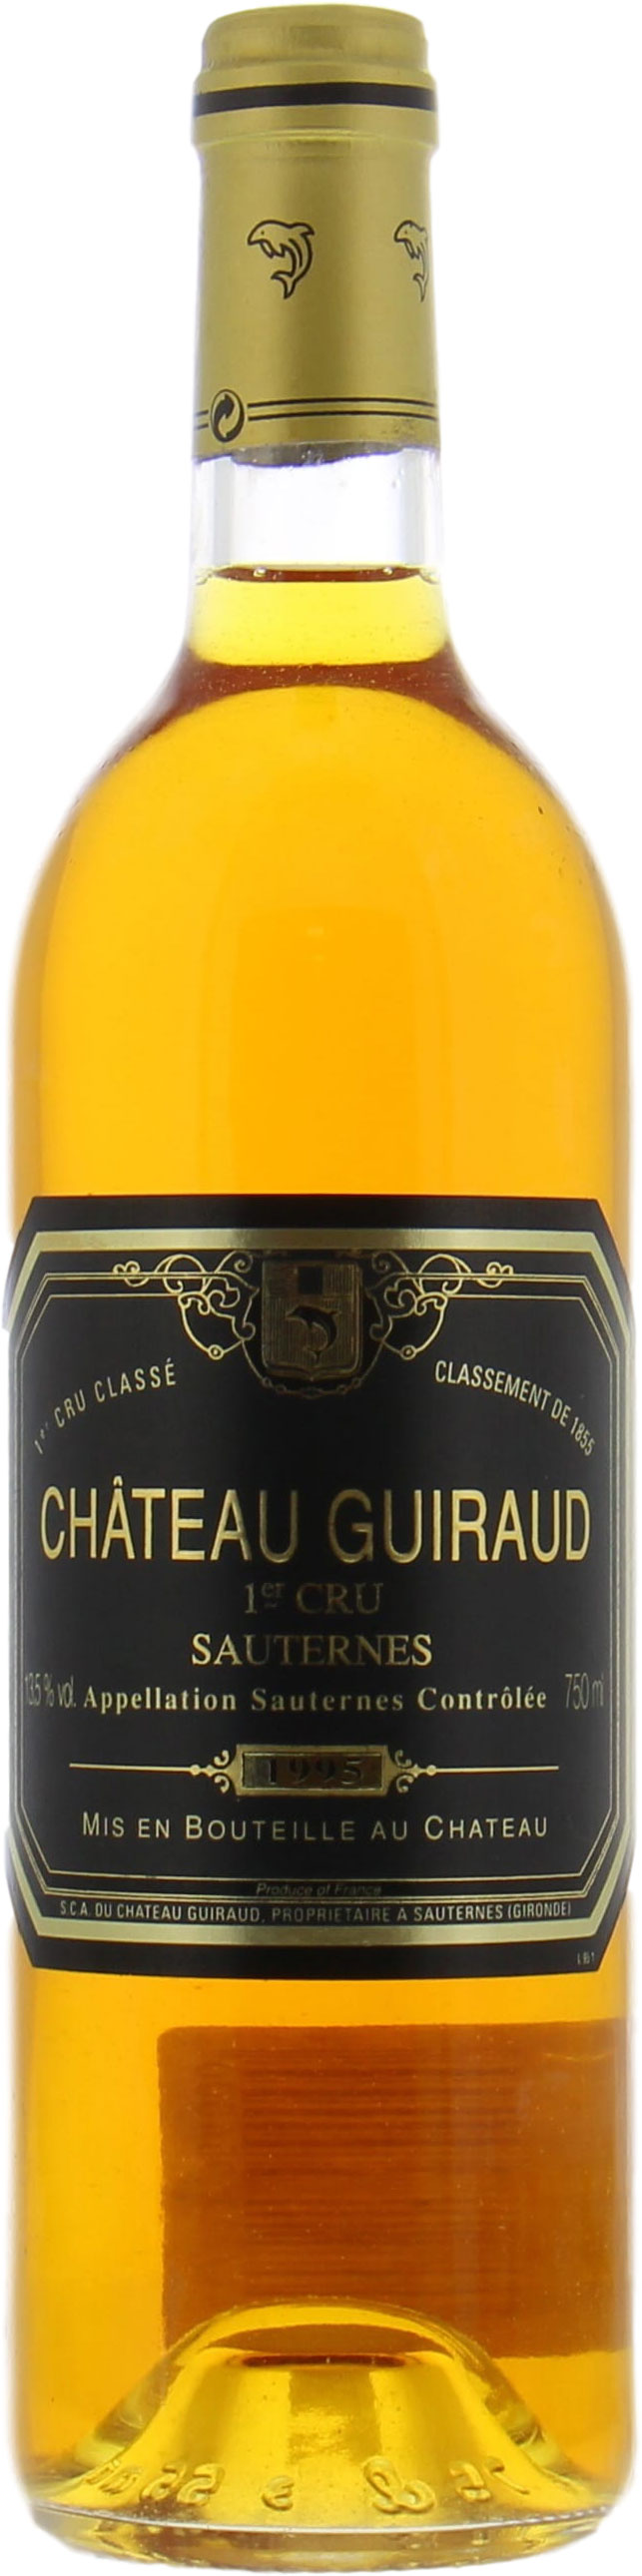 Chateau Guiraud - Chateau Guiraud 1995